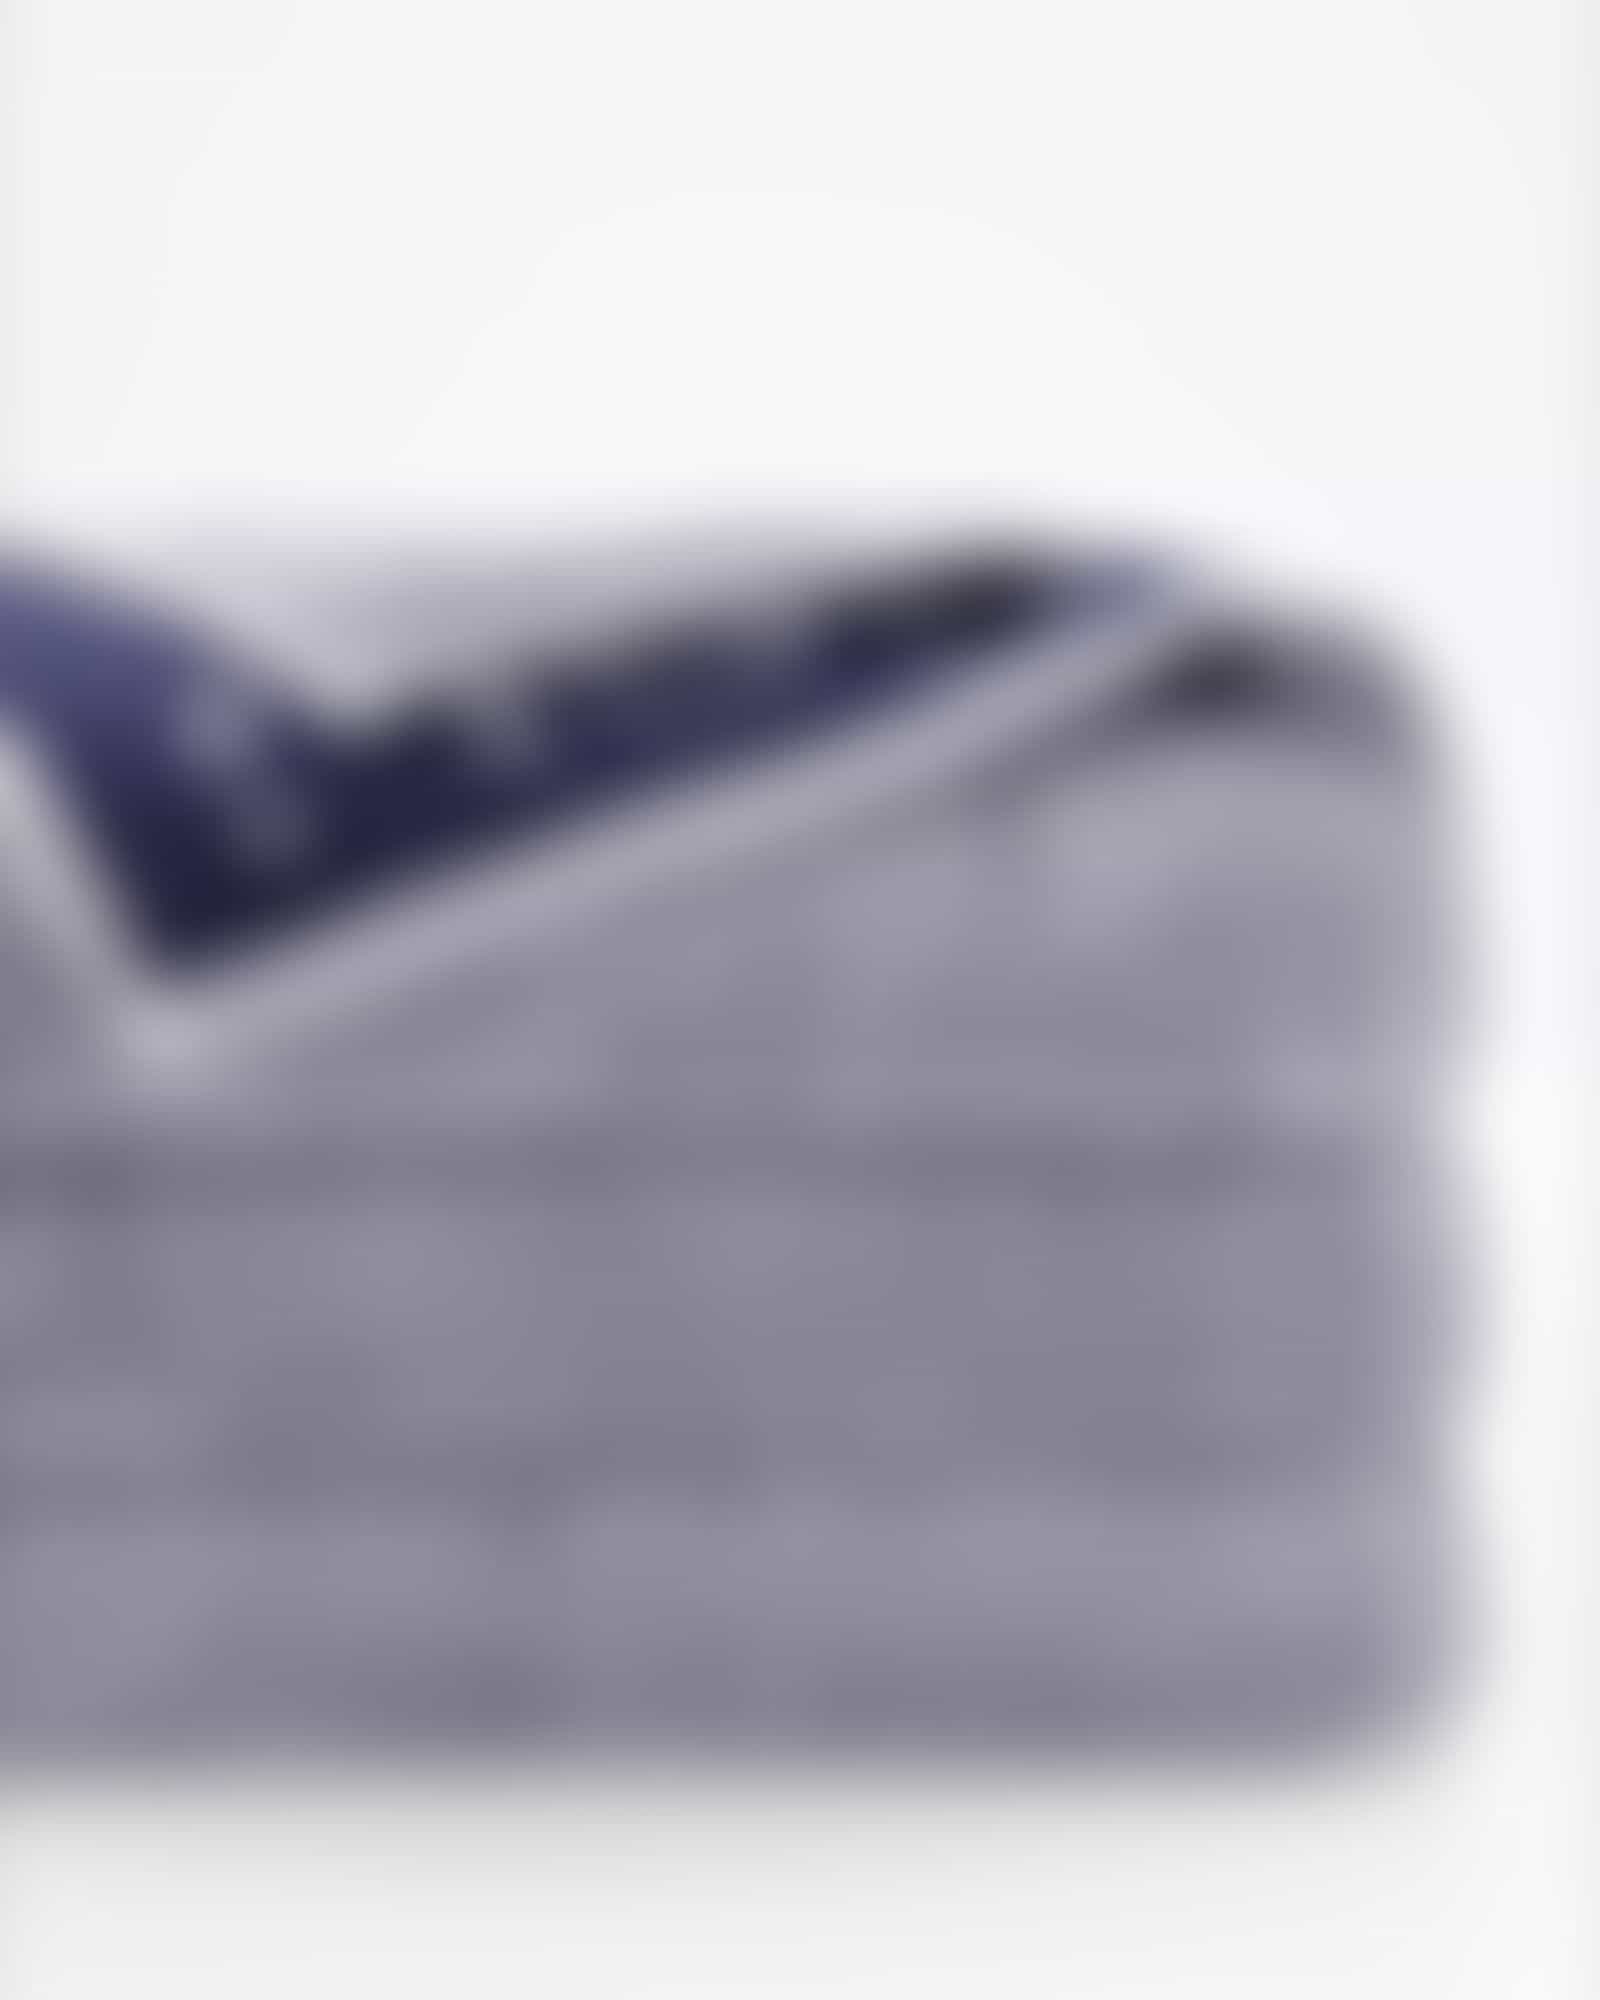 JOOP! Handtücher Classic Doubleface 1600 - Farbe: denim - 19 - Handtuch 50x100 cm Detailbild 2